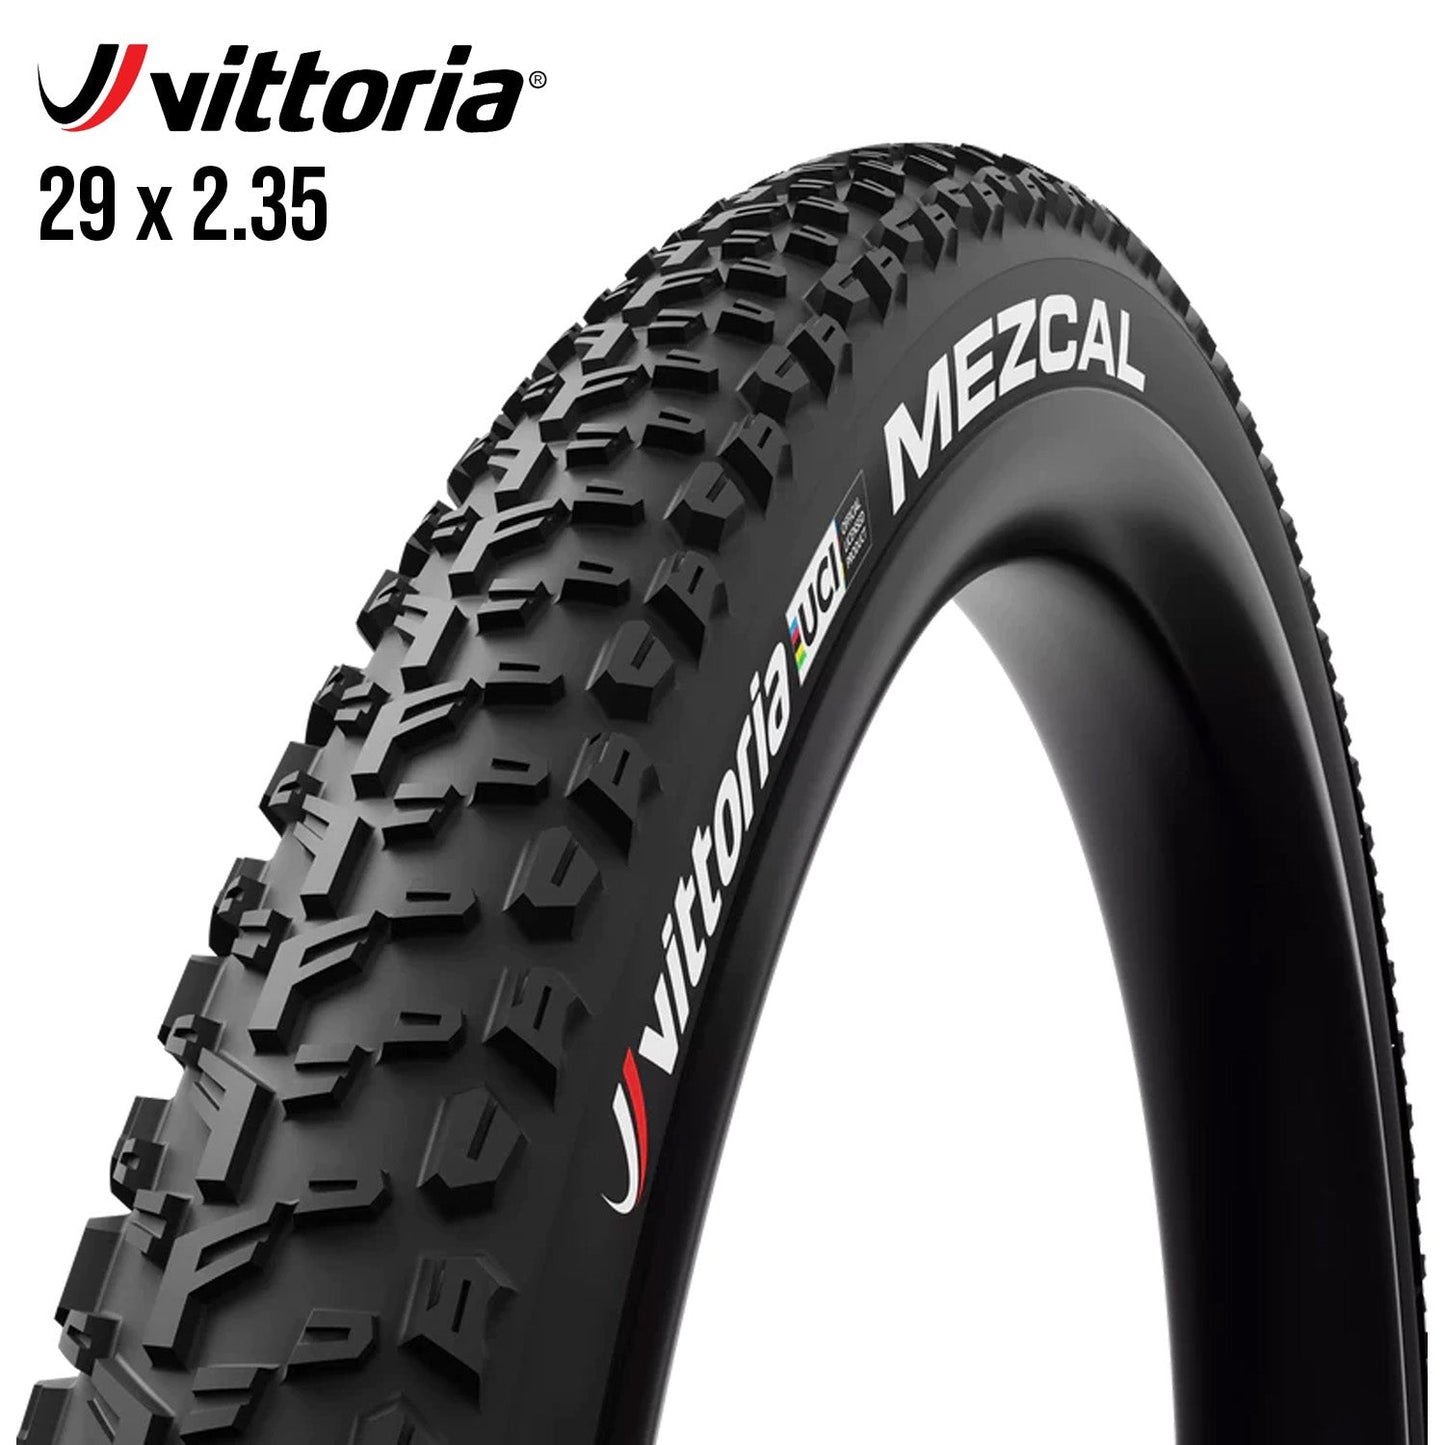 Vittoria Mezcal MTB XC UCI-Licensed Tubeless Ready Tire 29er - Black